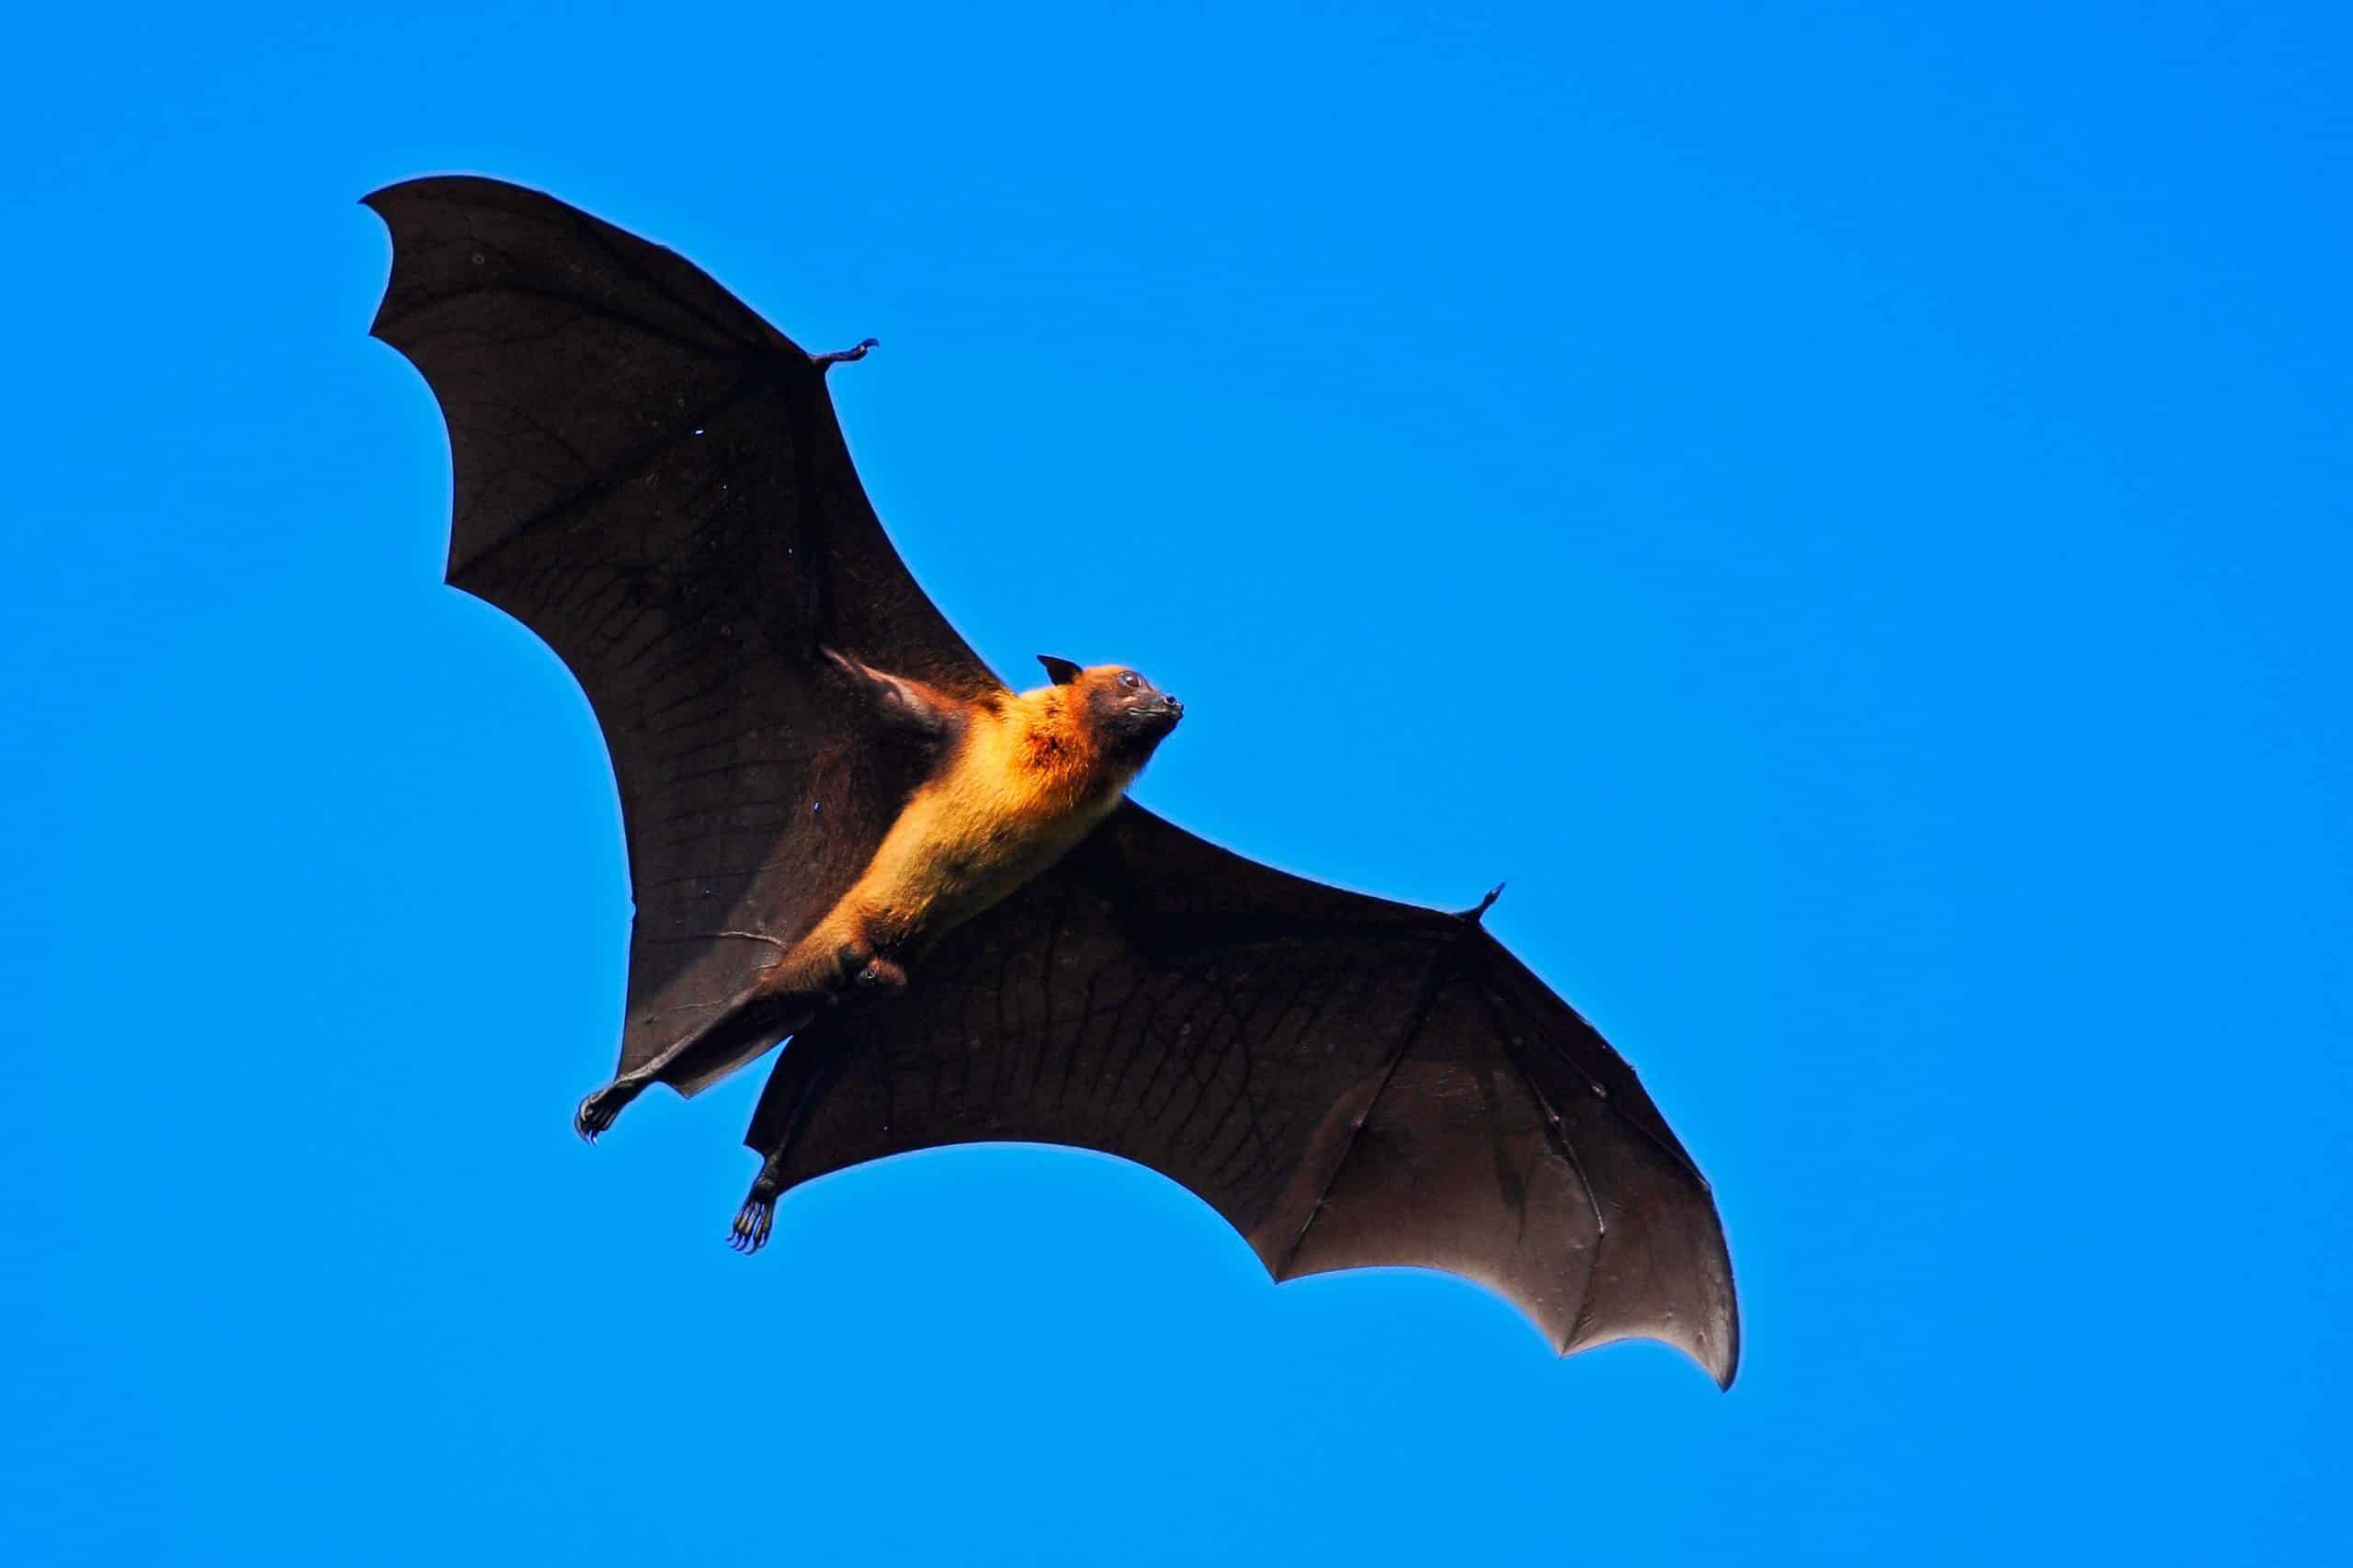 Giant Indian Fruit Bat in blue sky